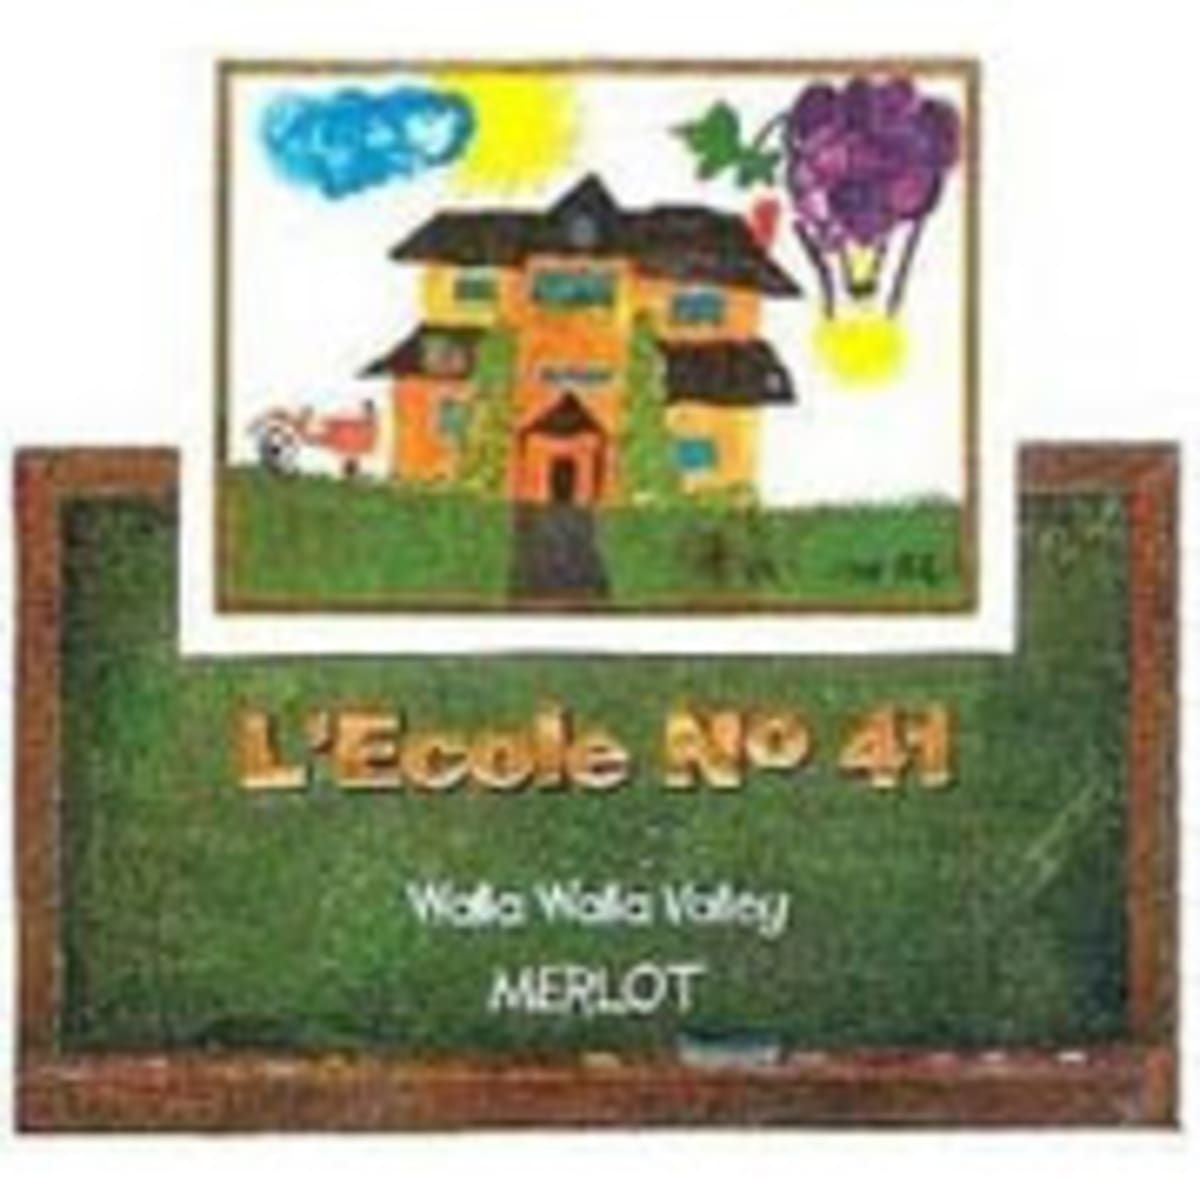 L'Ecole 41 Walla Walla Valley Merlot 2001 Front Label